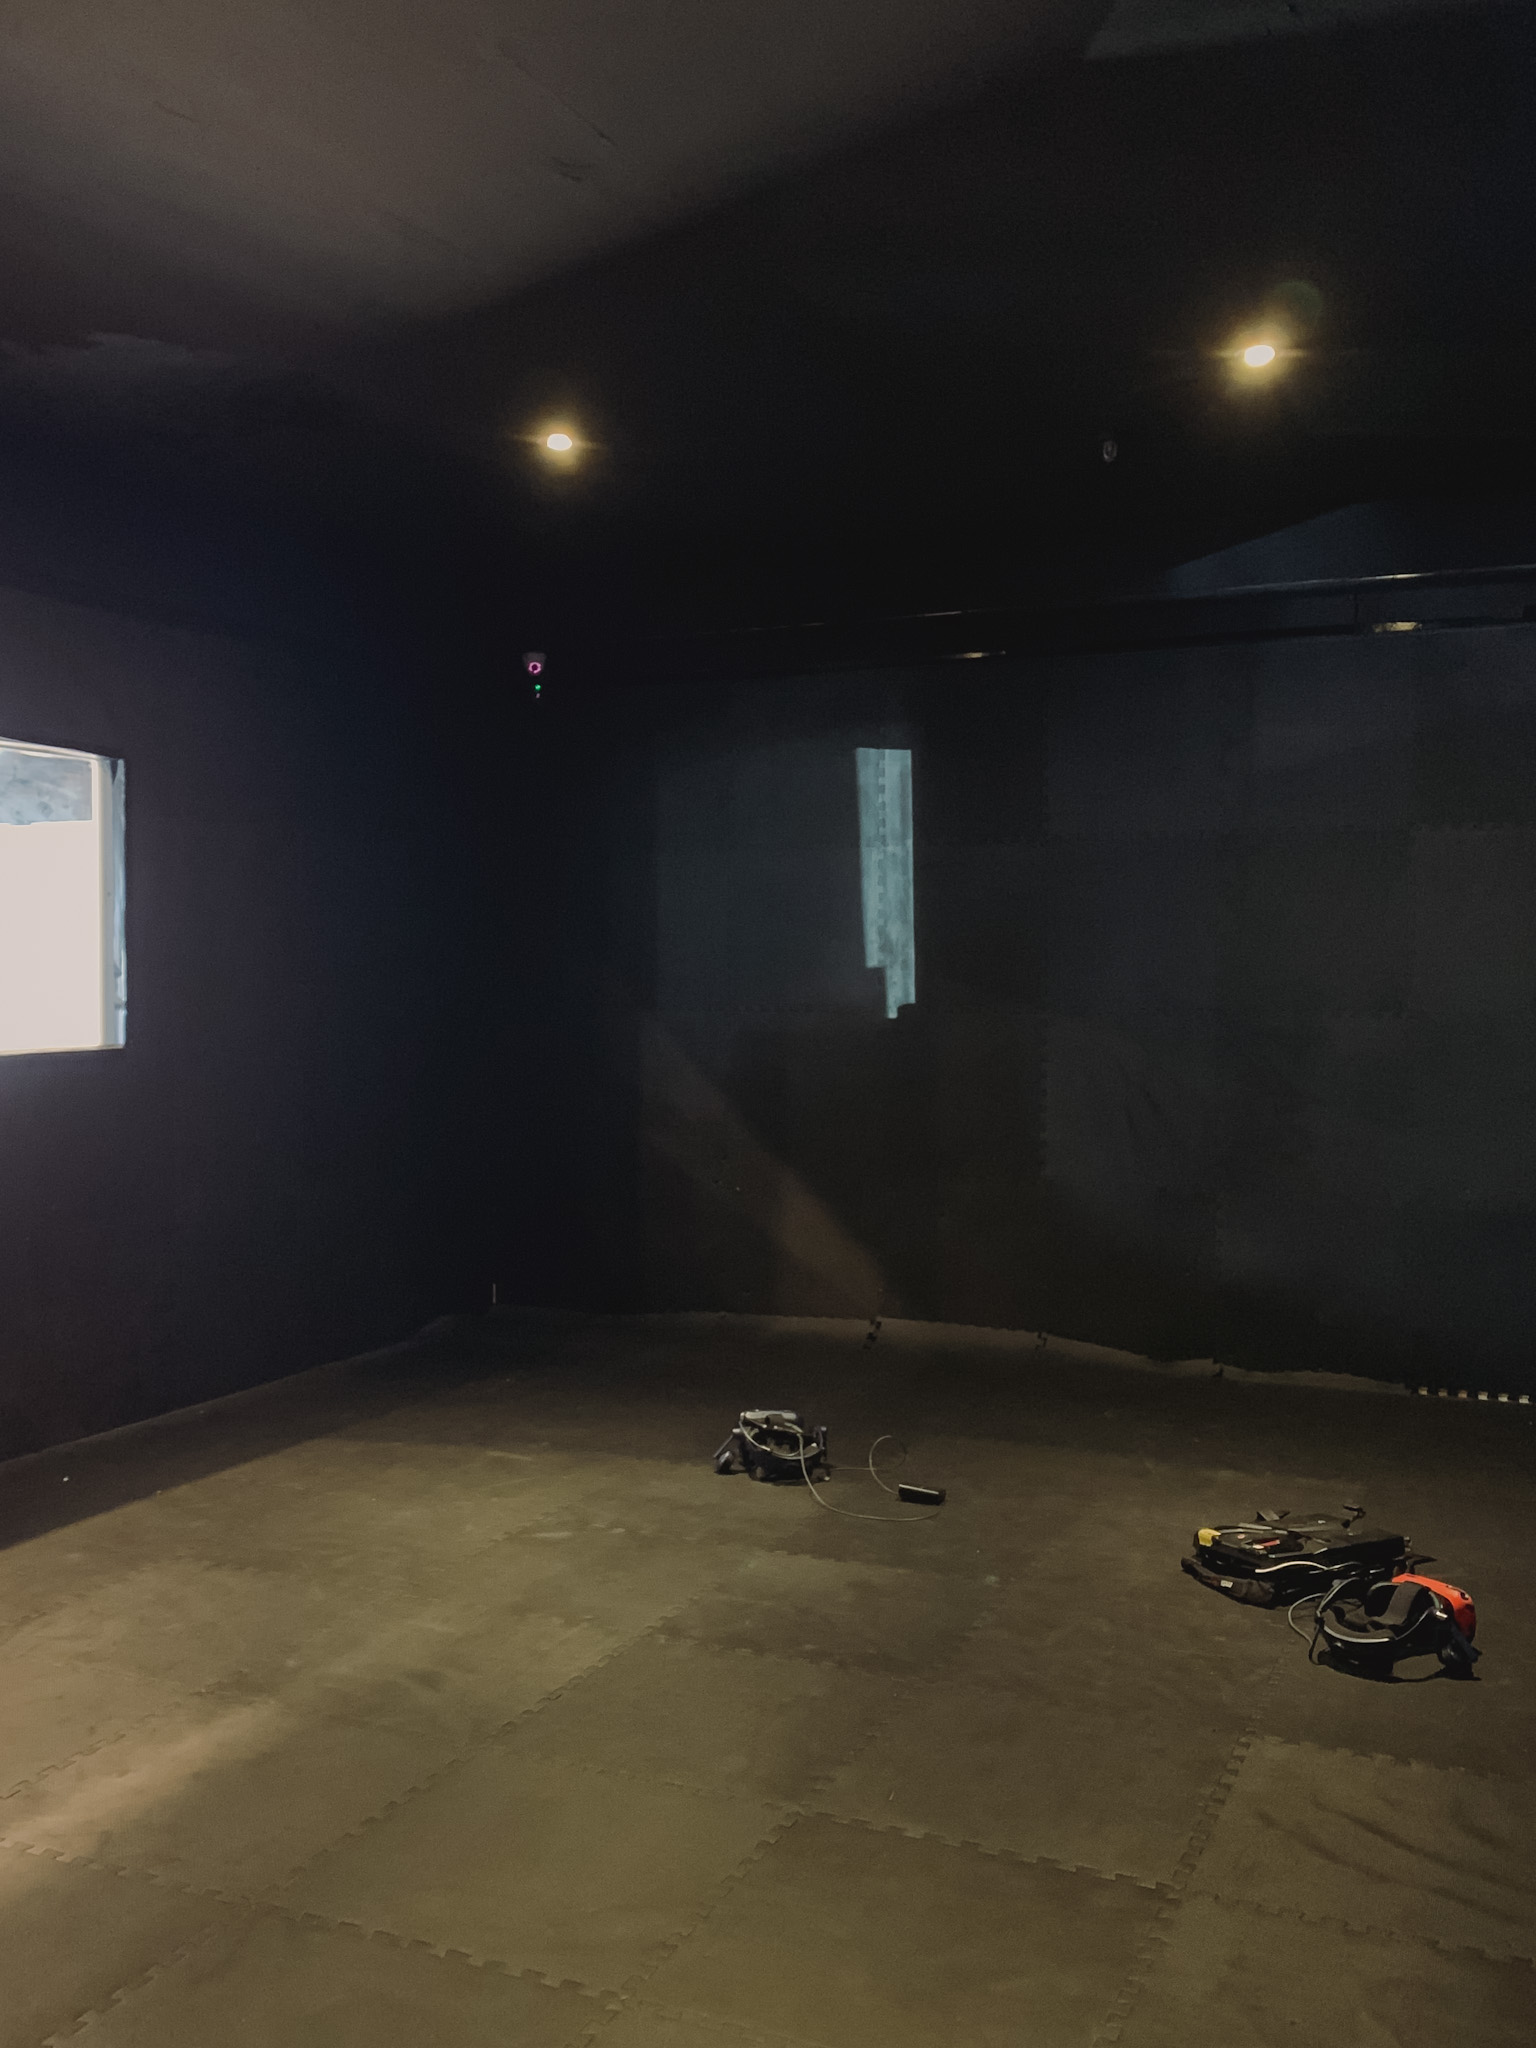 VR escape room at VR Escapism in Markham, Ontario